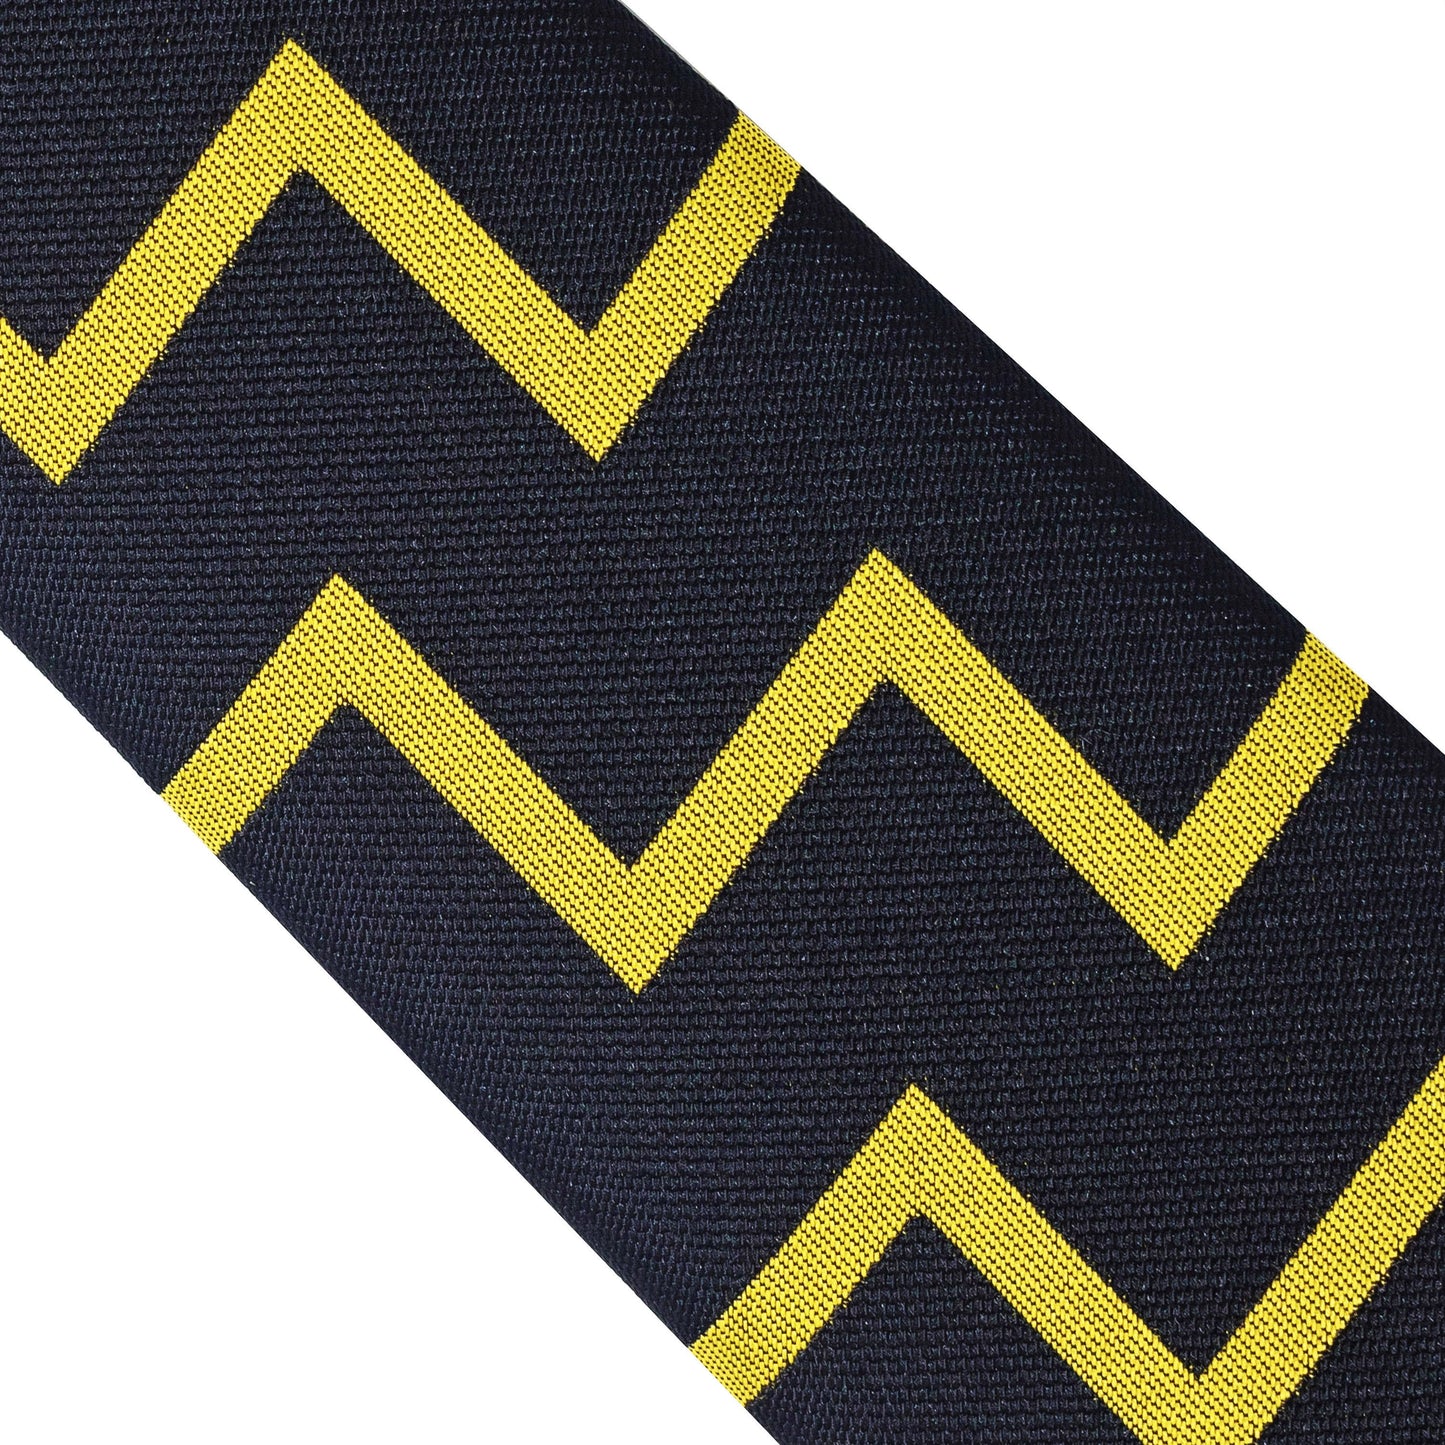 Woven Zig Zag Tie (Black and Yellow Zig Zag Tie)